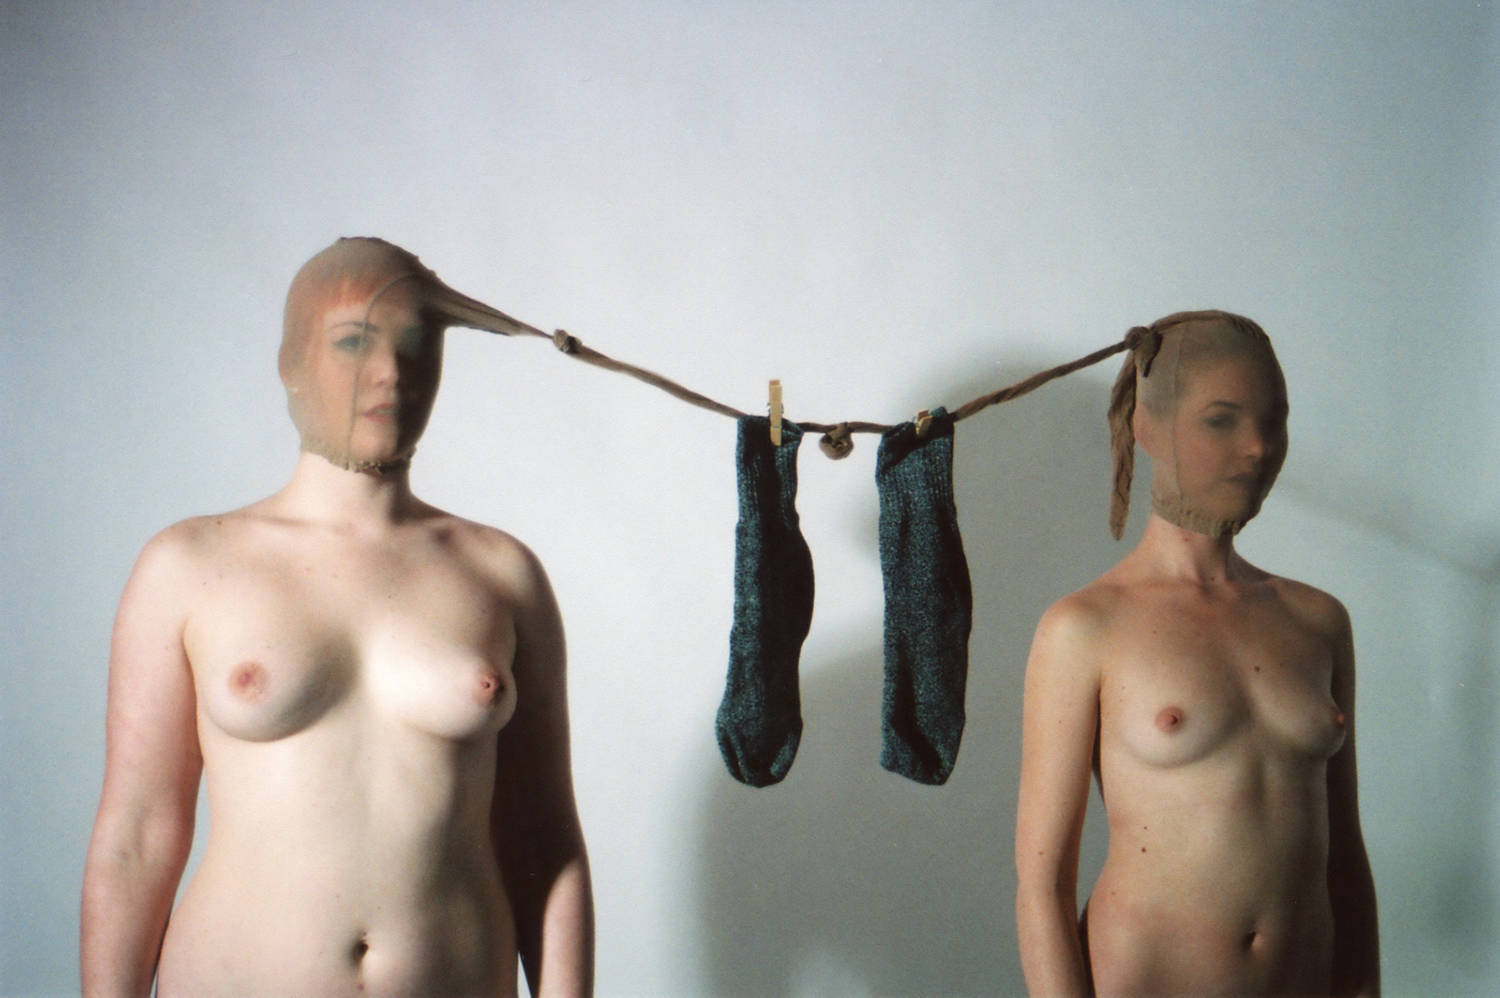 pantyhose over head, nude portrait by Ian Allaway